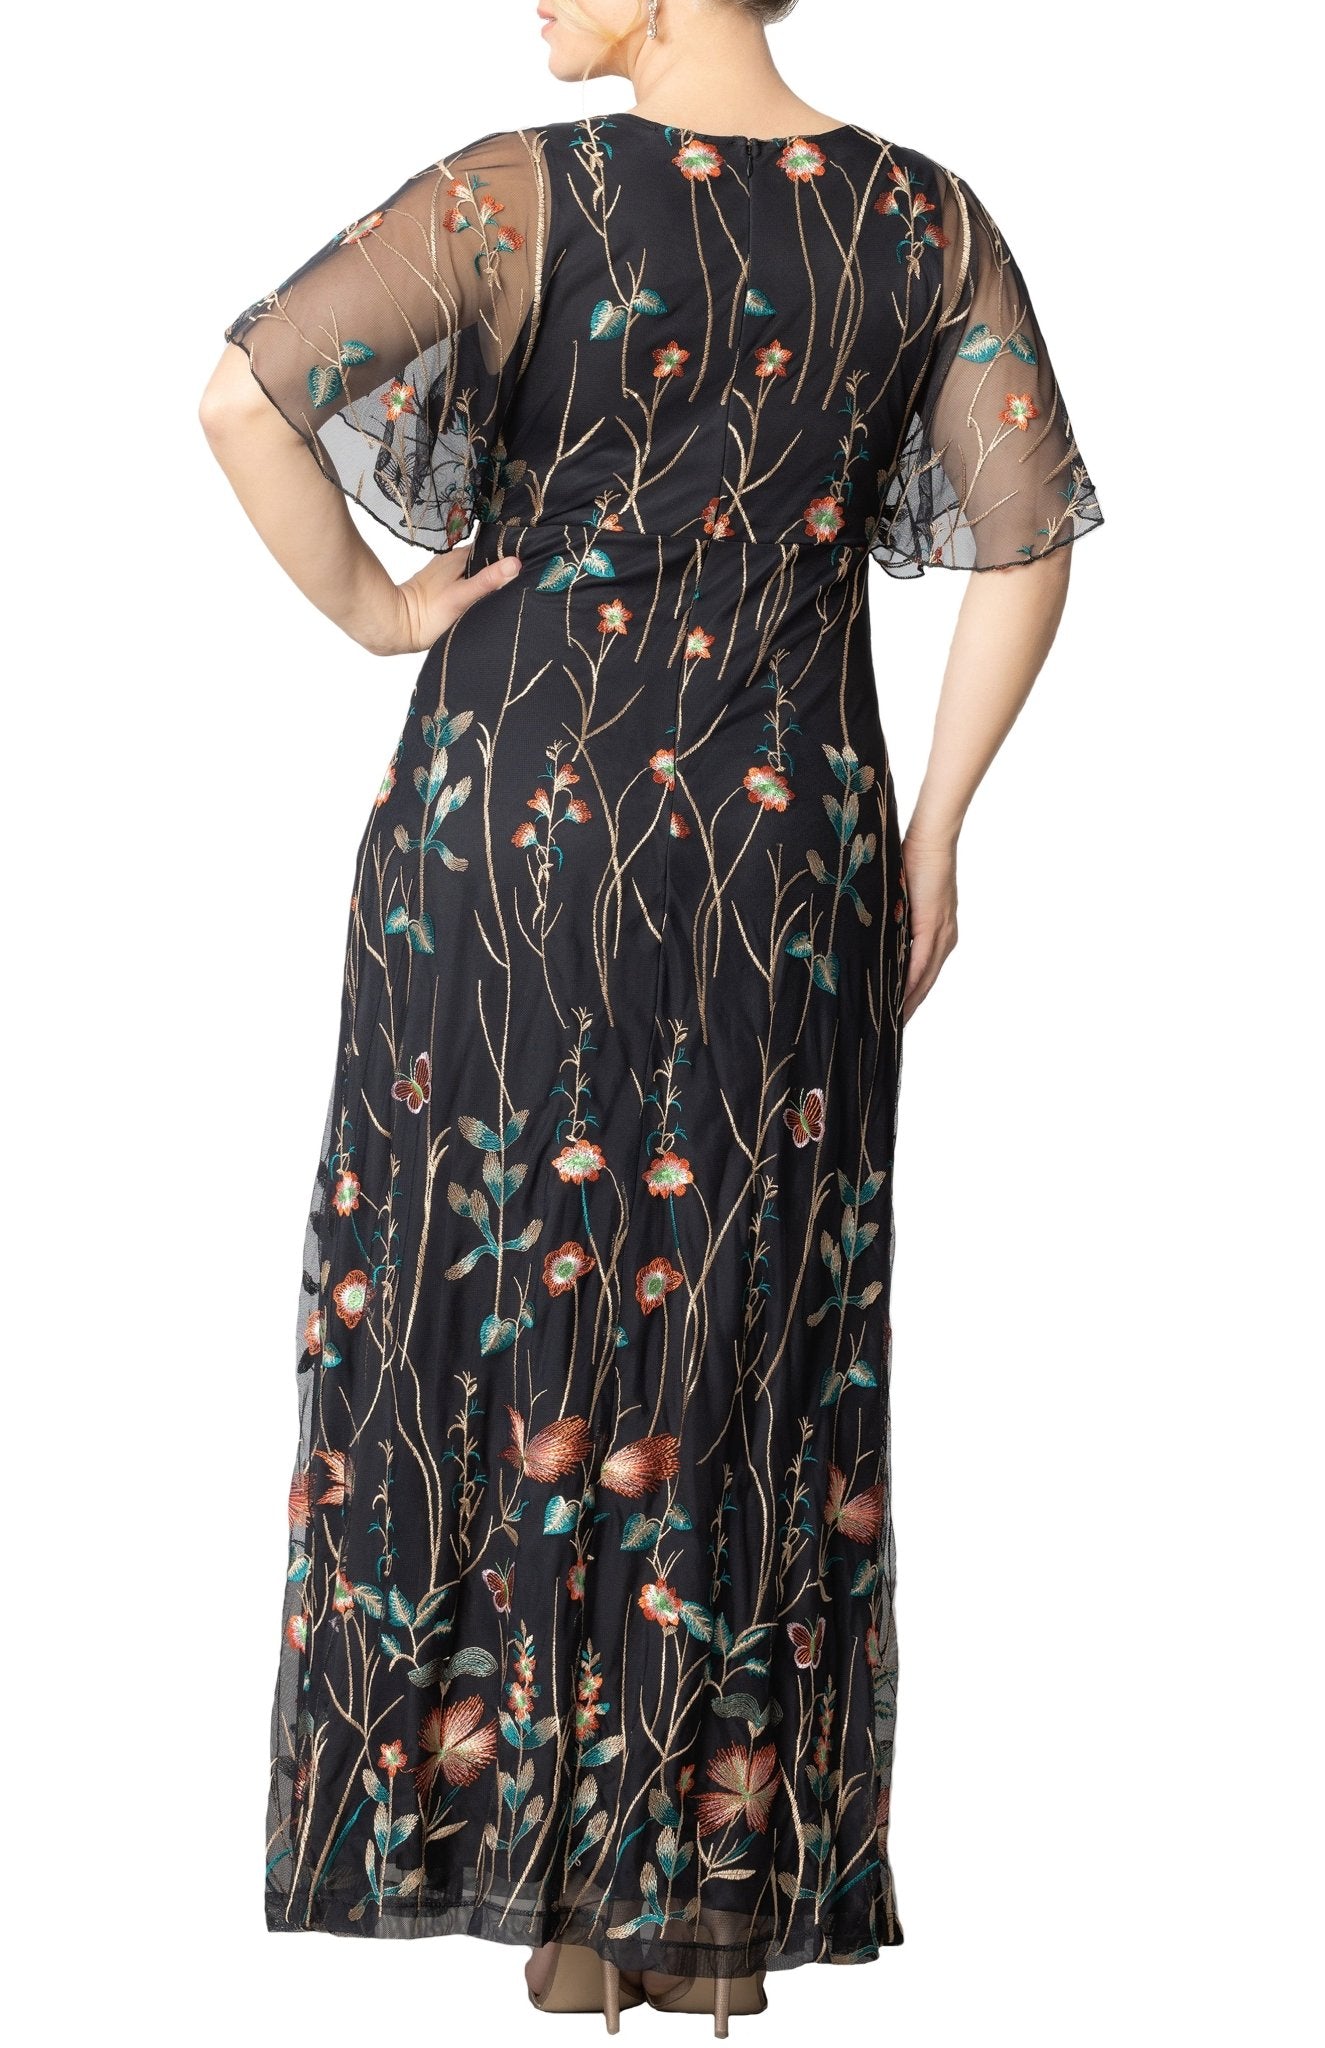 Embroidered Elegance Evening Gown - Plus - DressbarnDresses